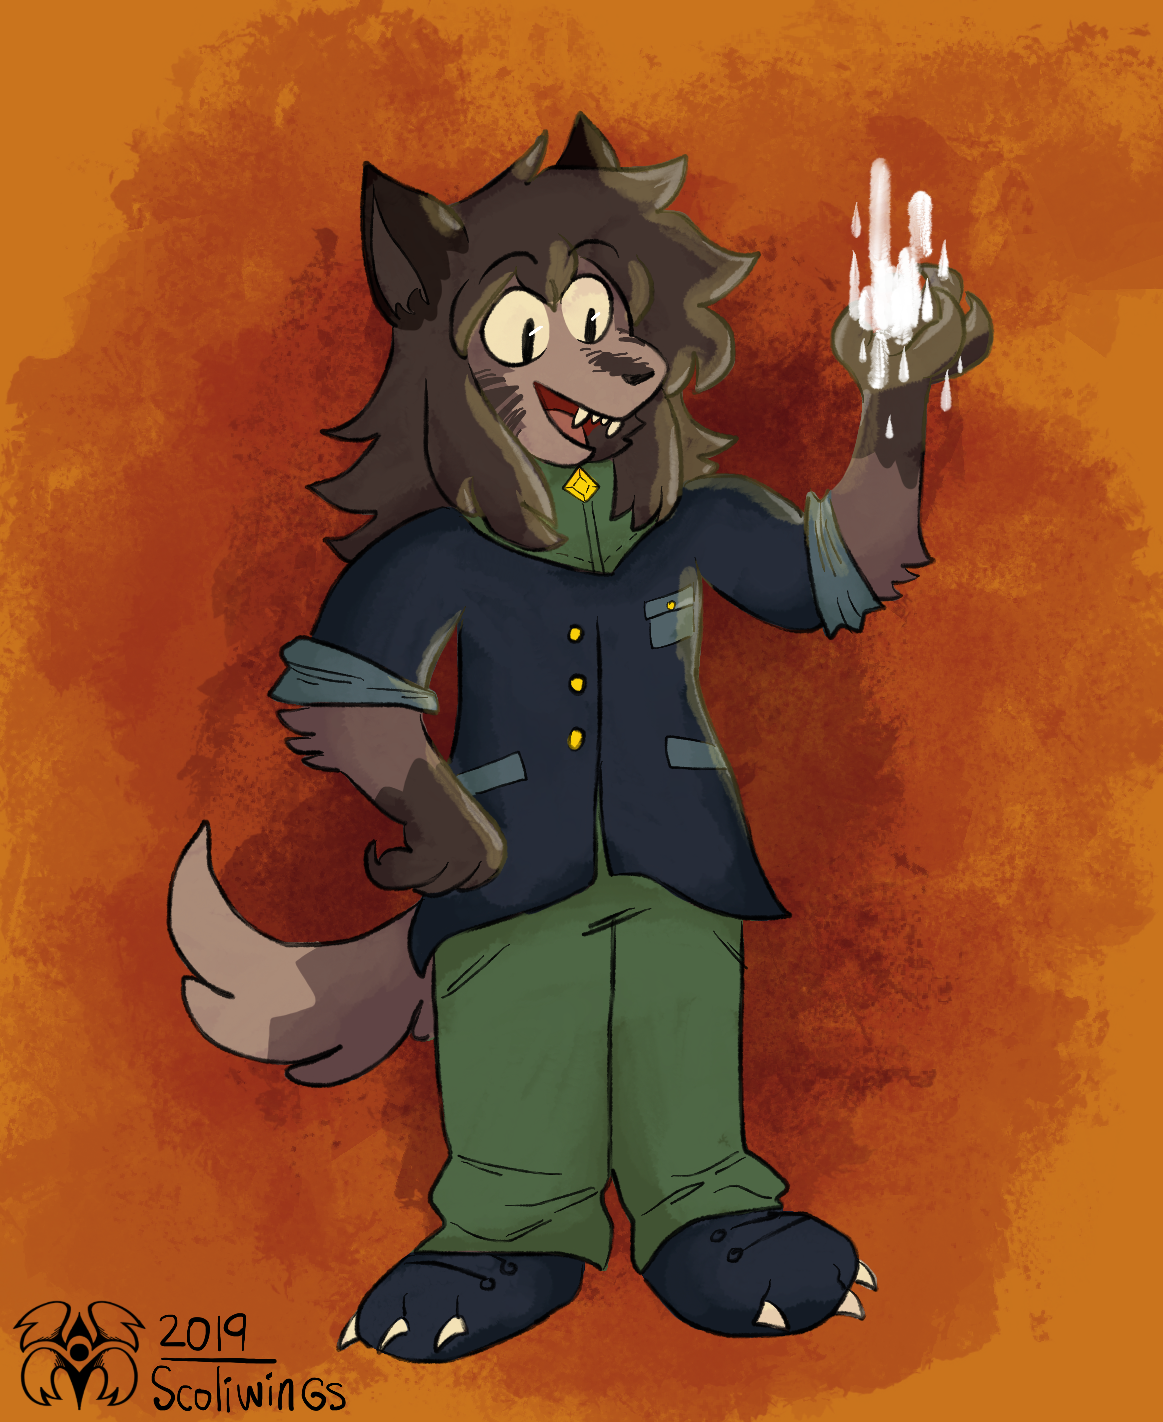 art trade: half-transformed werewolf